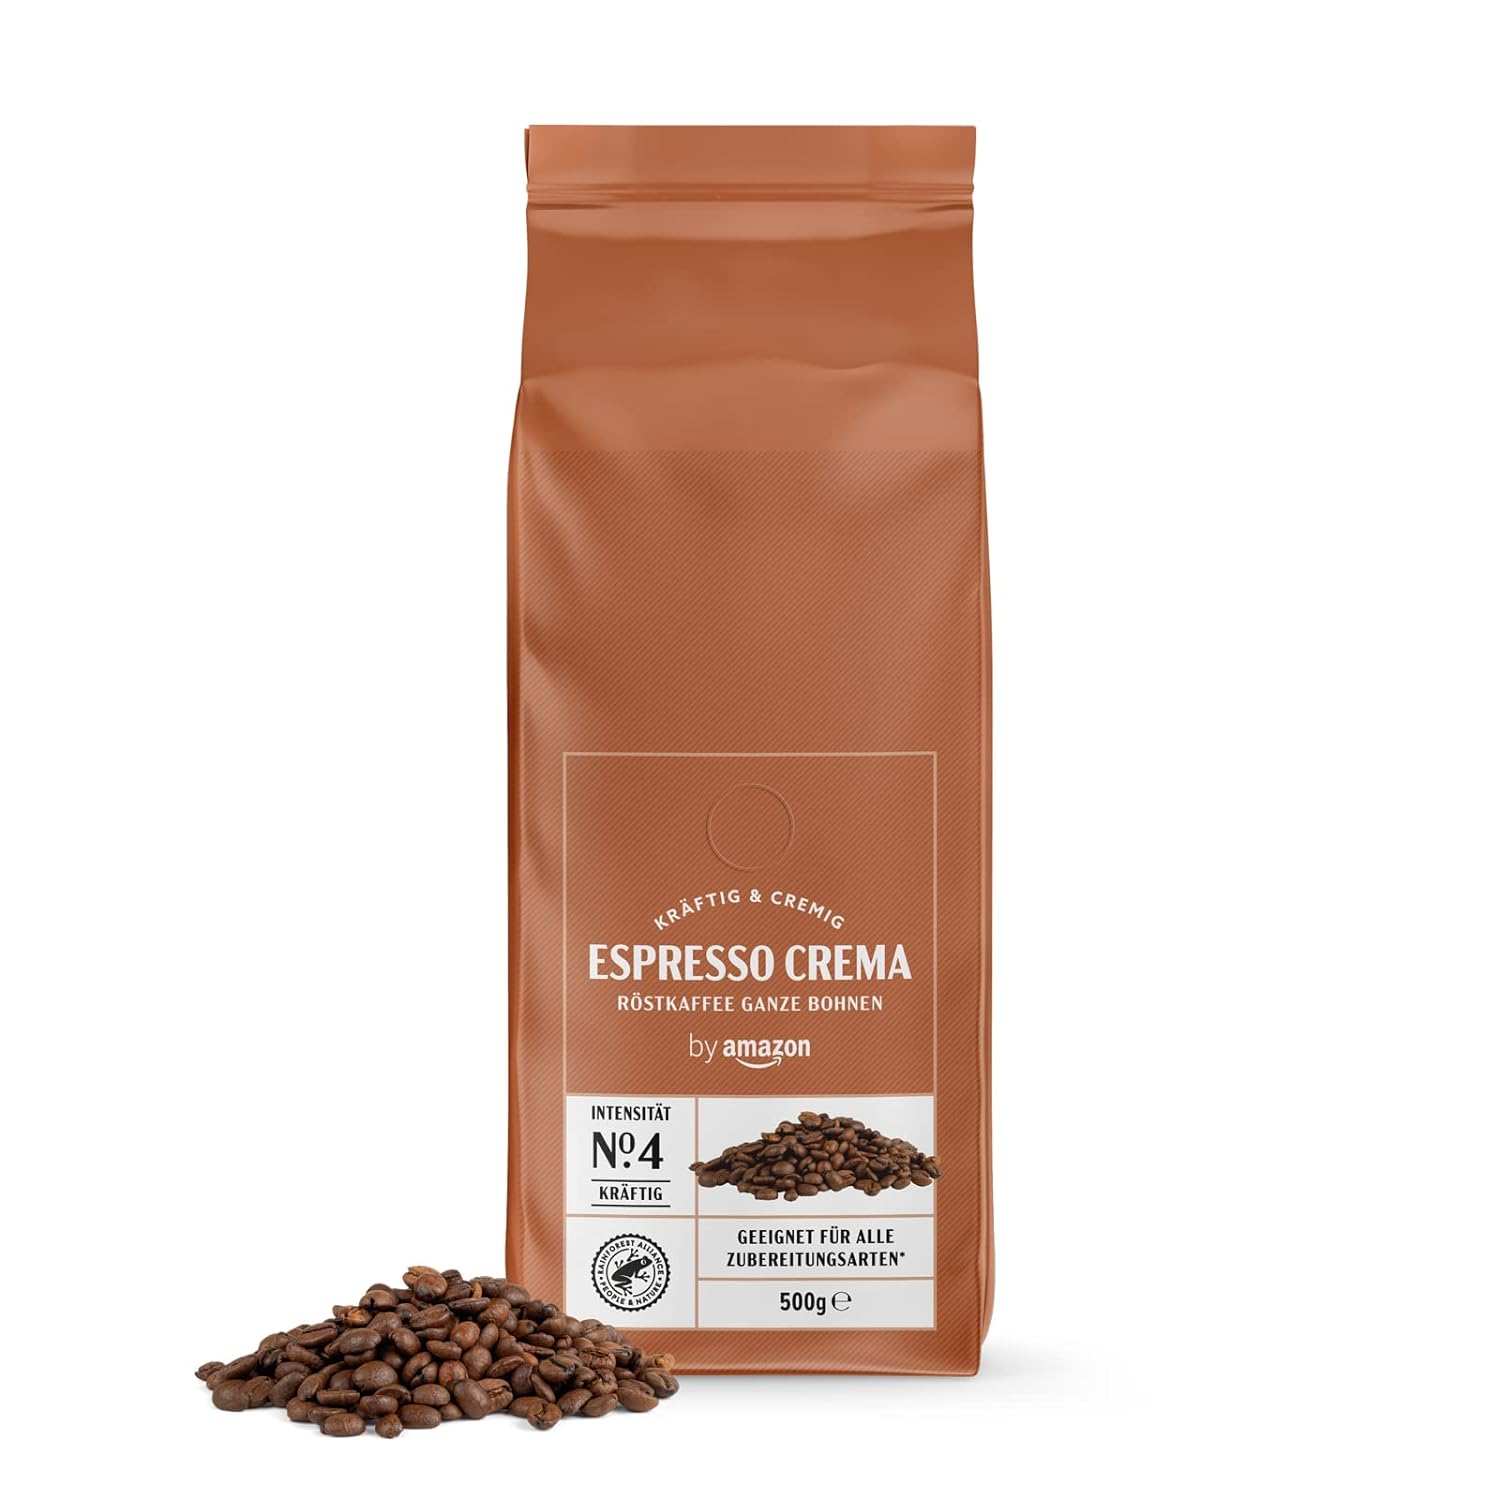 by Amazon Espresso Crema Coffee Beans - Rainforest Alliance Certification, Light Roast, 500g (Pack of 1)